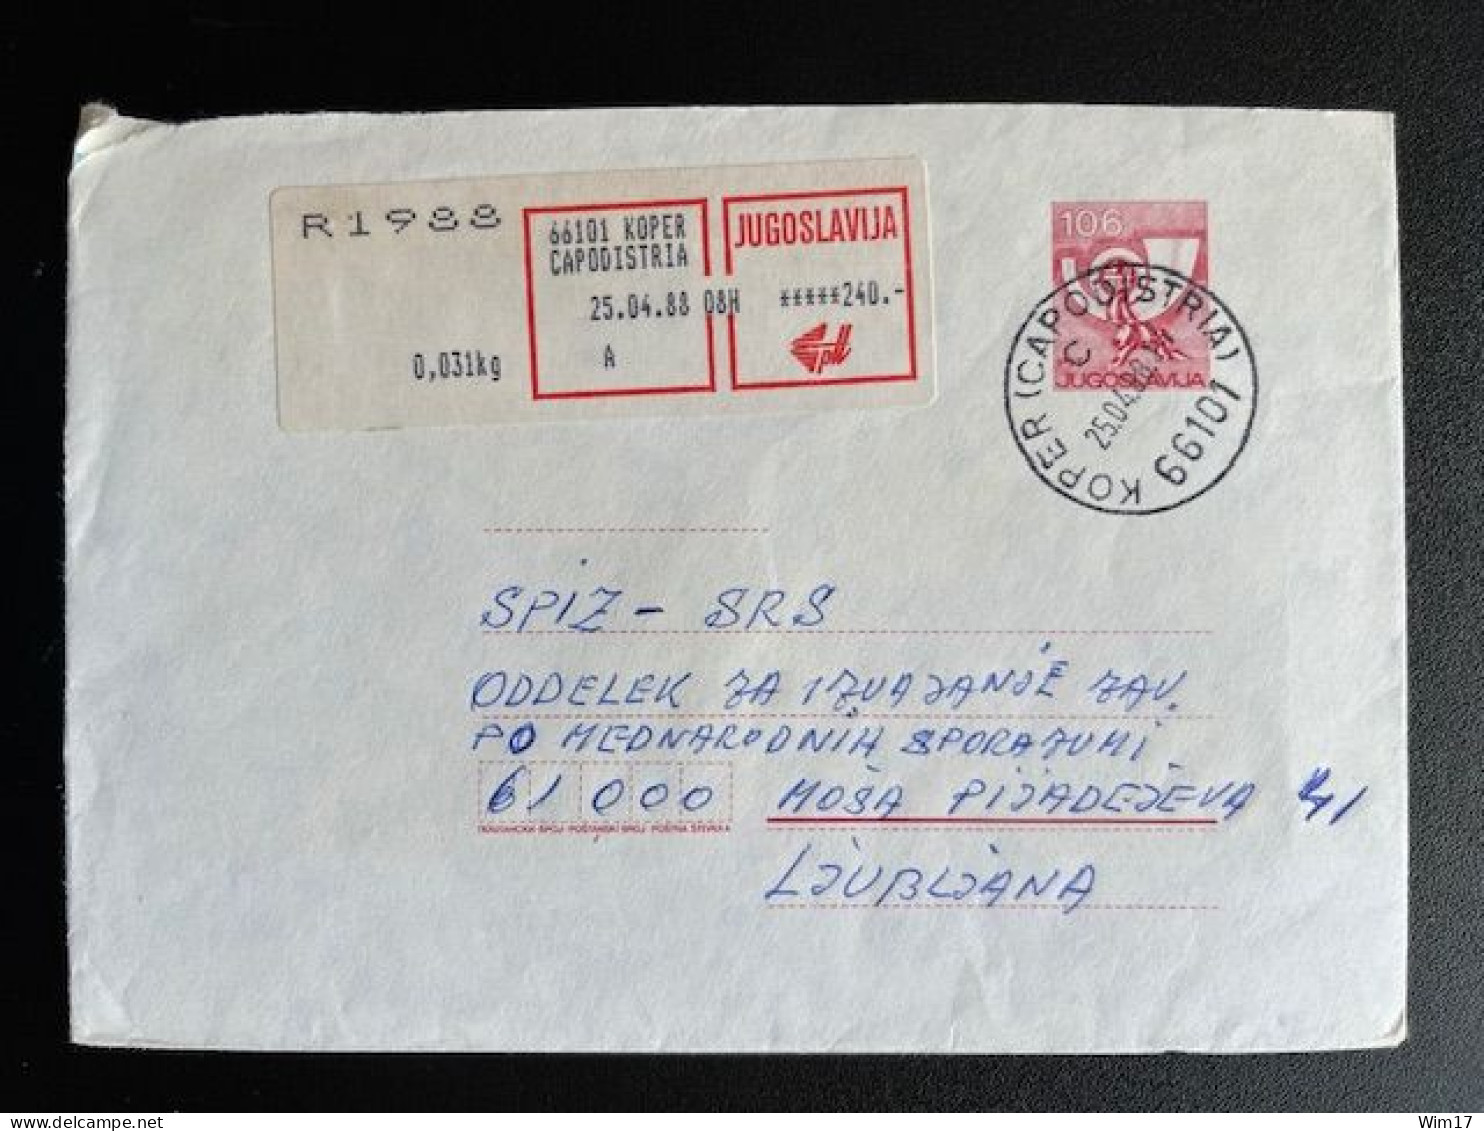 JUGOSLAVIJA YUGOSLAVIA 1988 REGISTERED LETTER KOPER CAPODISTRIA TO LJUBLJANA 25-04-1988 - Covers & Documents